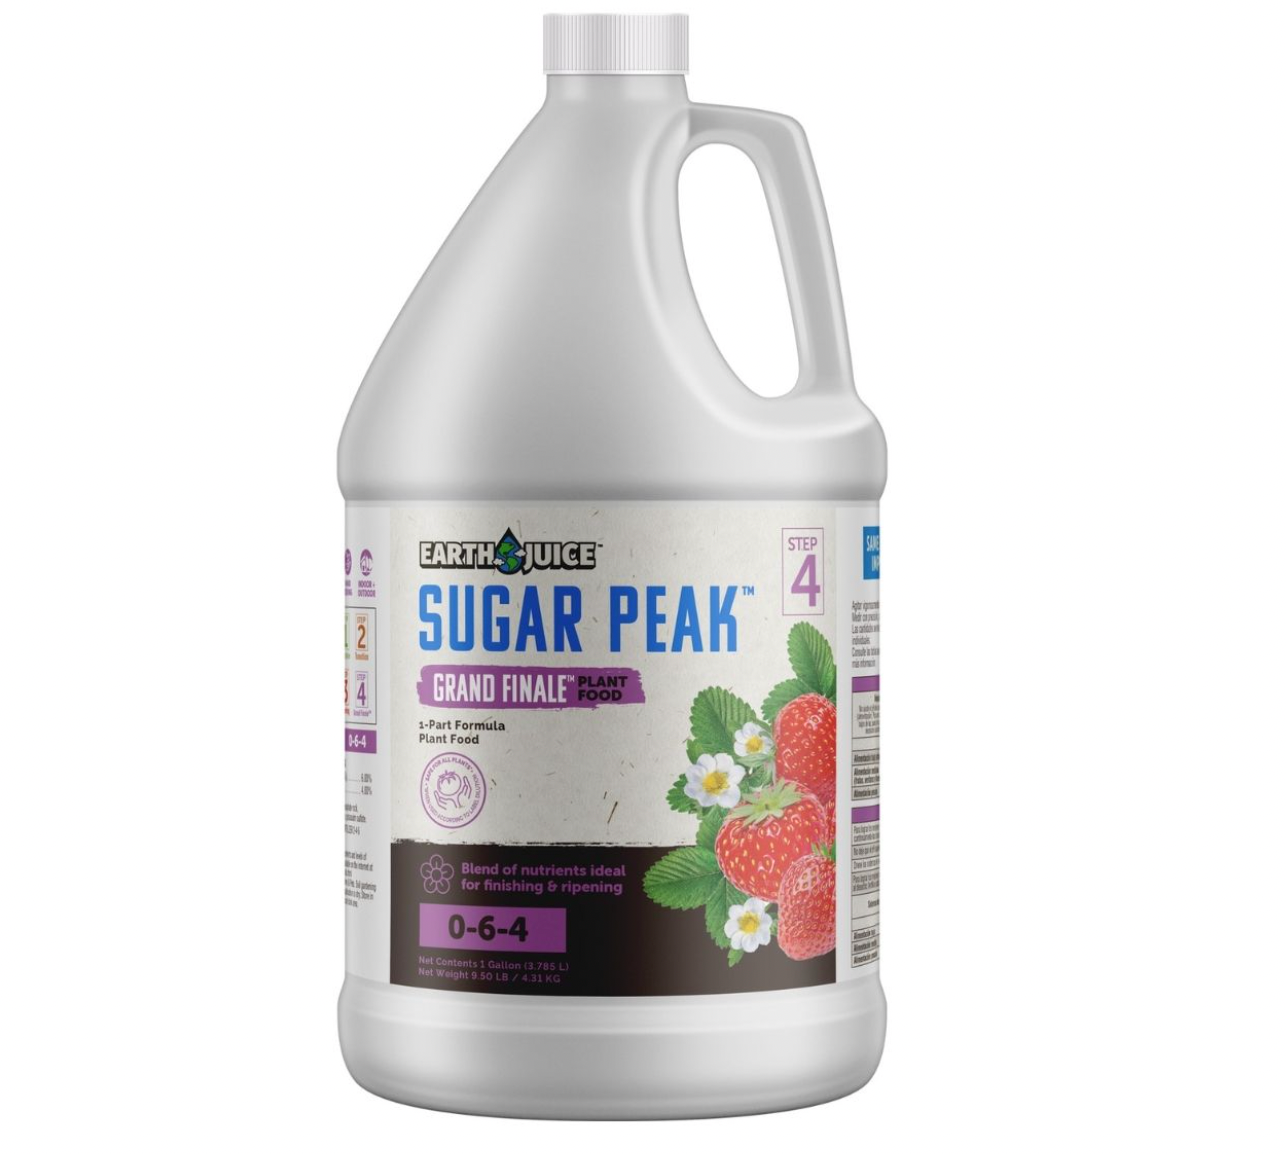 Earth Juice Sugar Peak Grand Finale